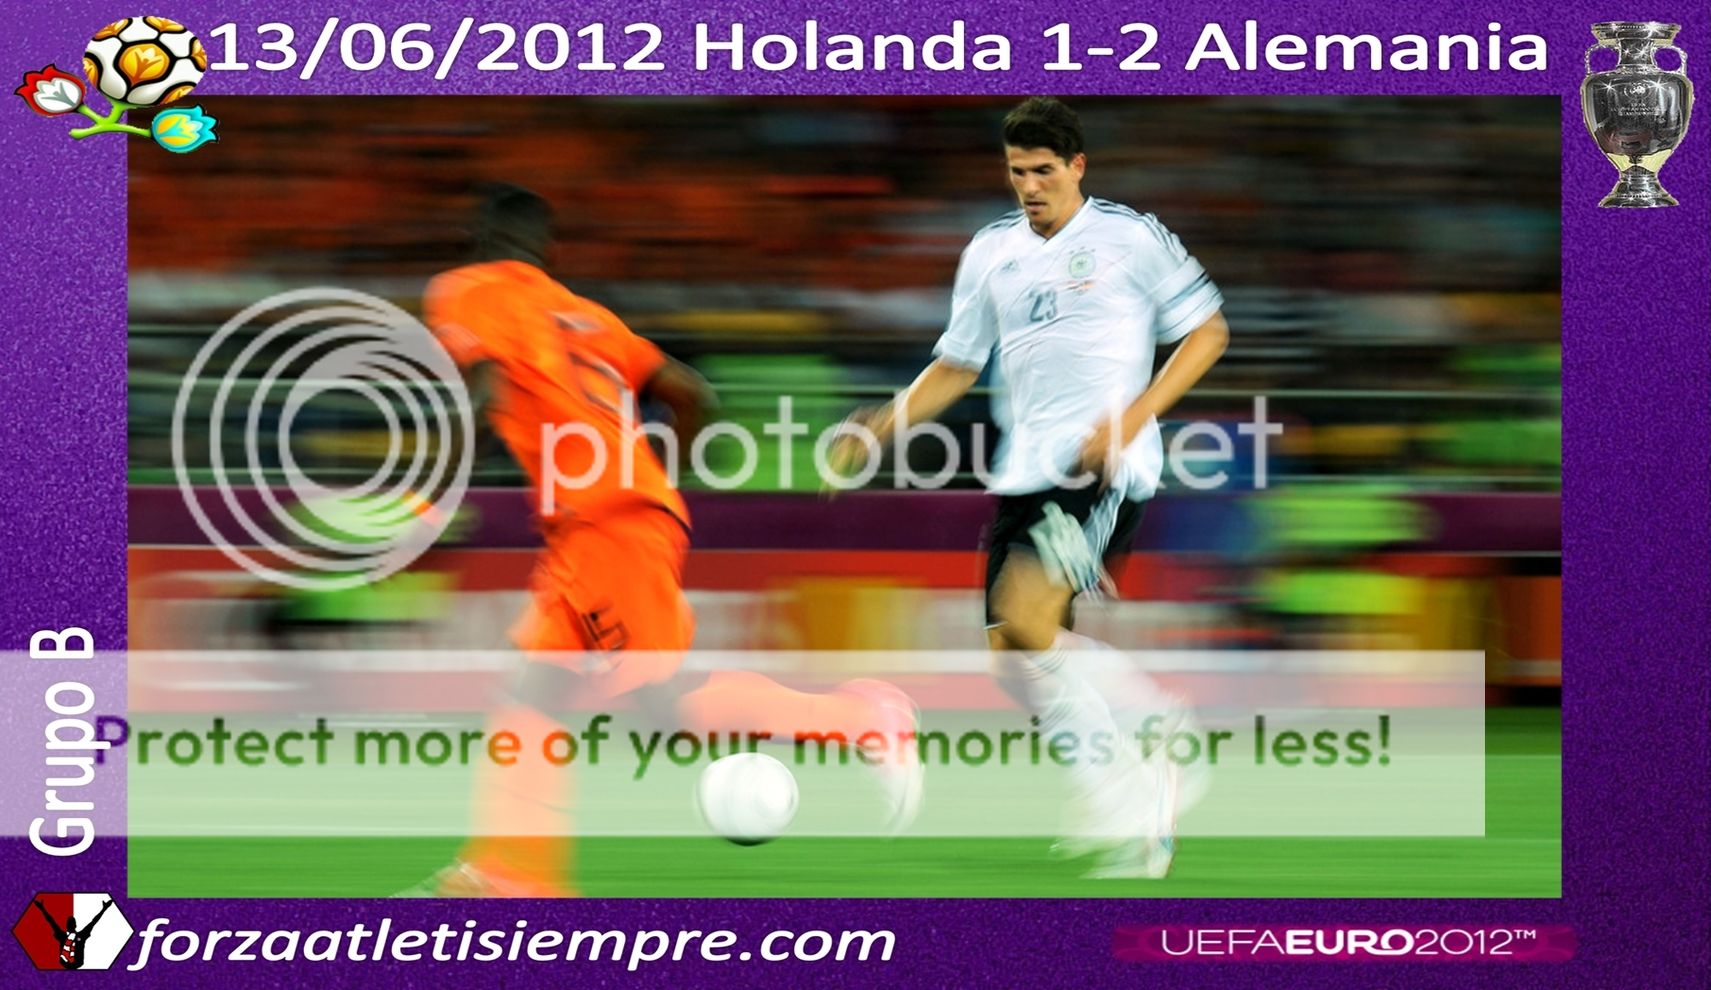 HOLANDA 1- ALEMANIA 2 - Holanda se tambalea 029Copiar-10